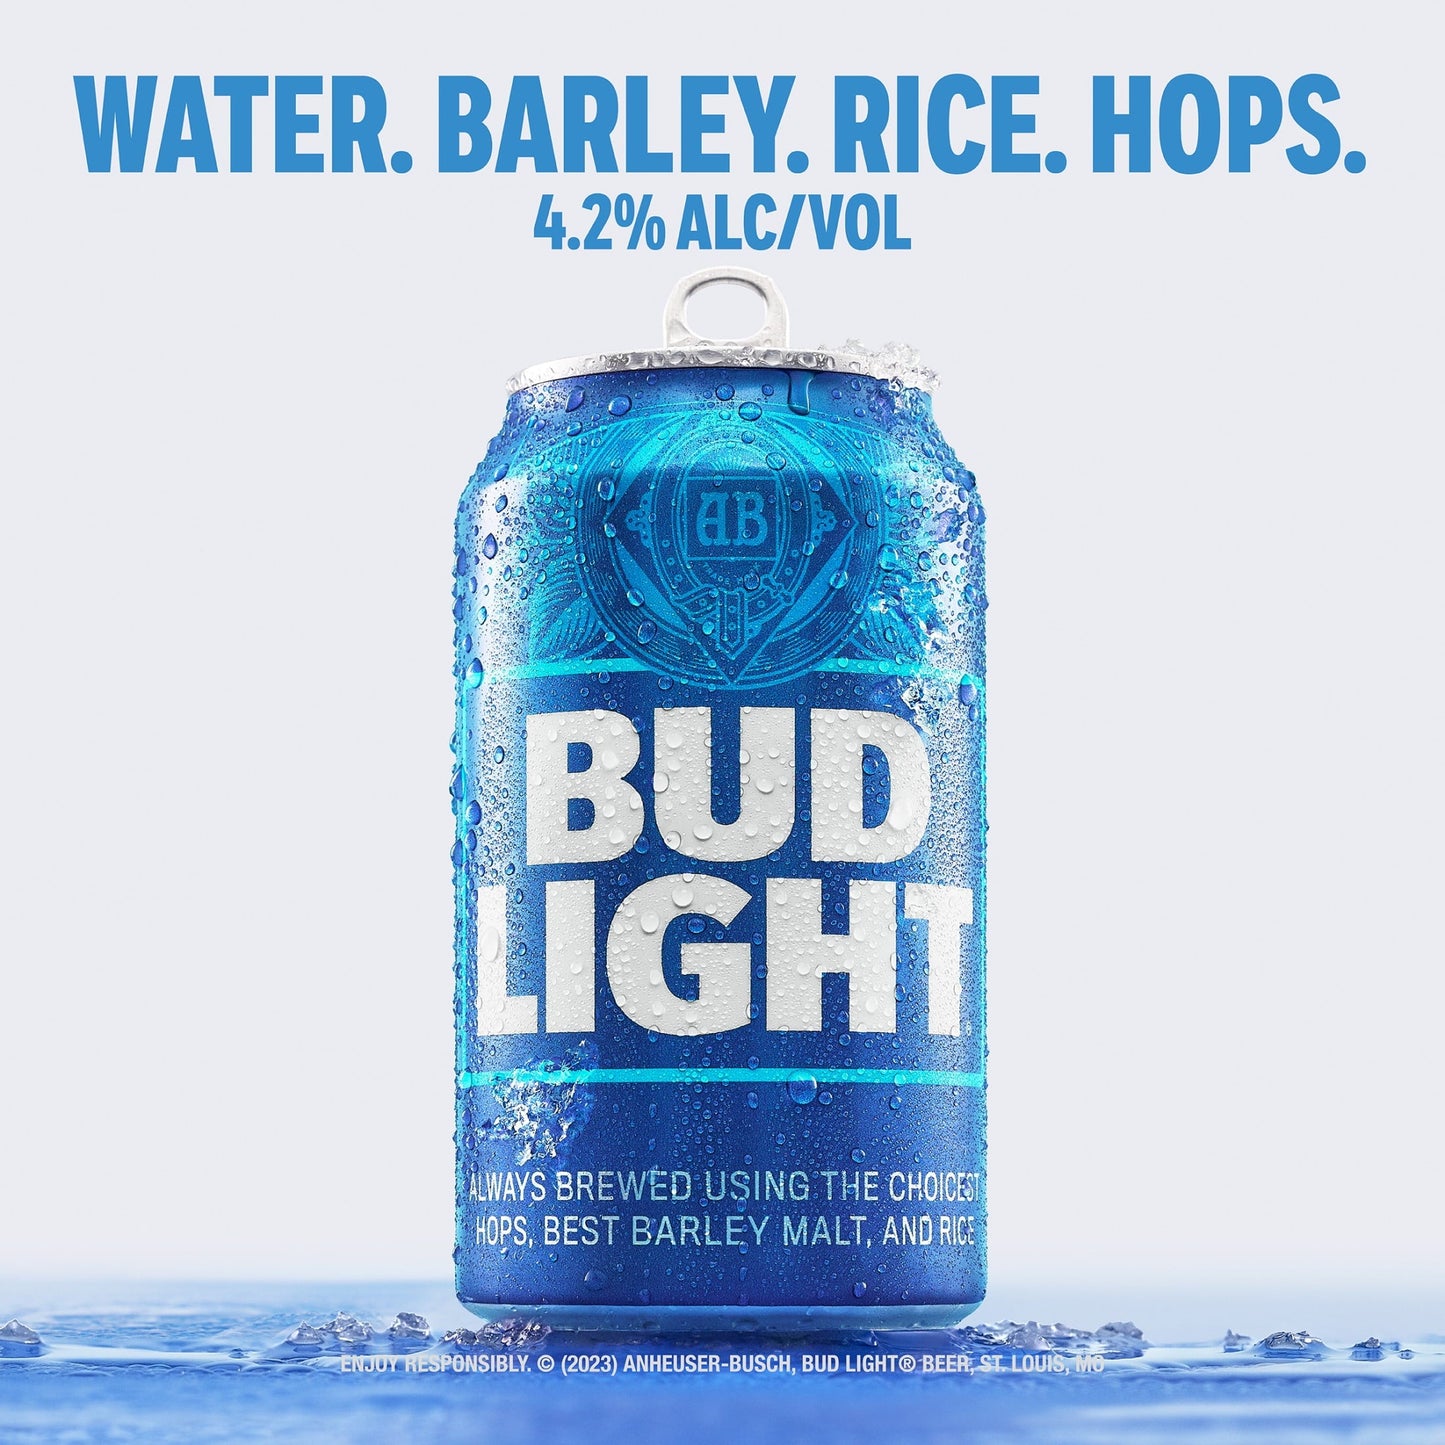 Bud Light Beer, 12 Pack Beer, 16 fl oz Glass Bottles, 4.2% ABV, Domestic Lager